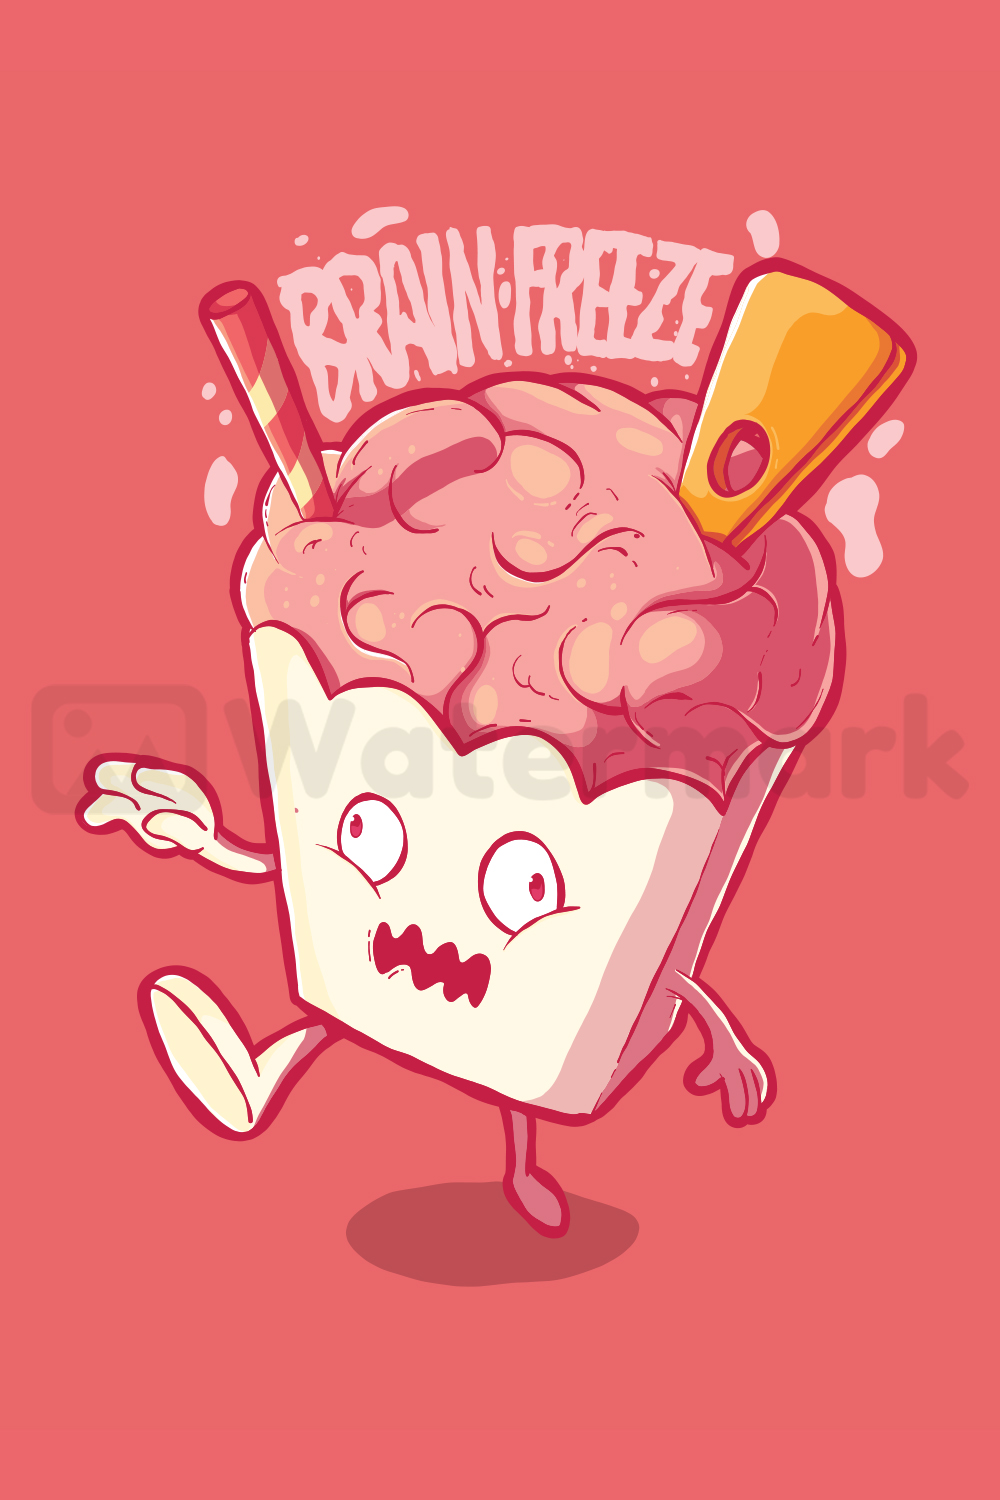 The Brain Freeze Vector Design Illustration pinterest image.